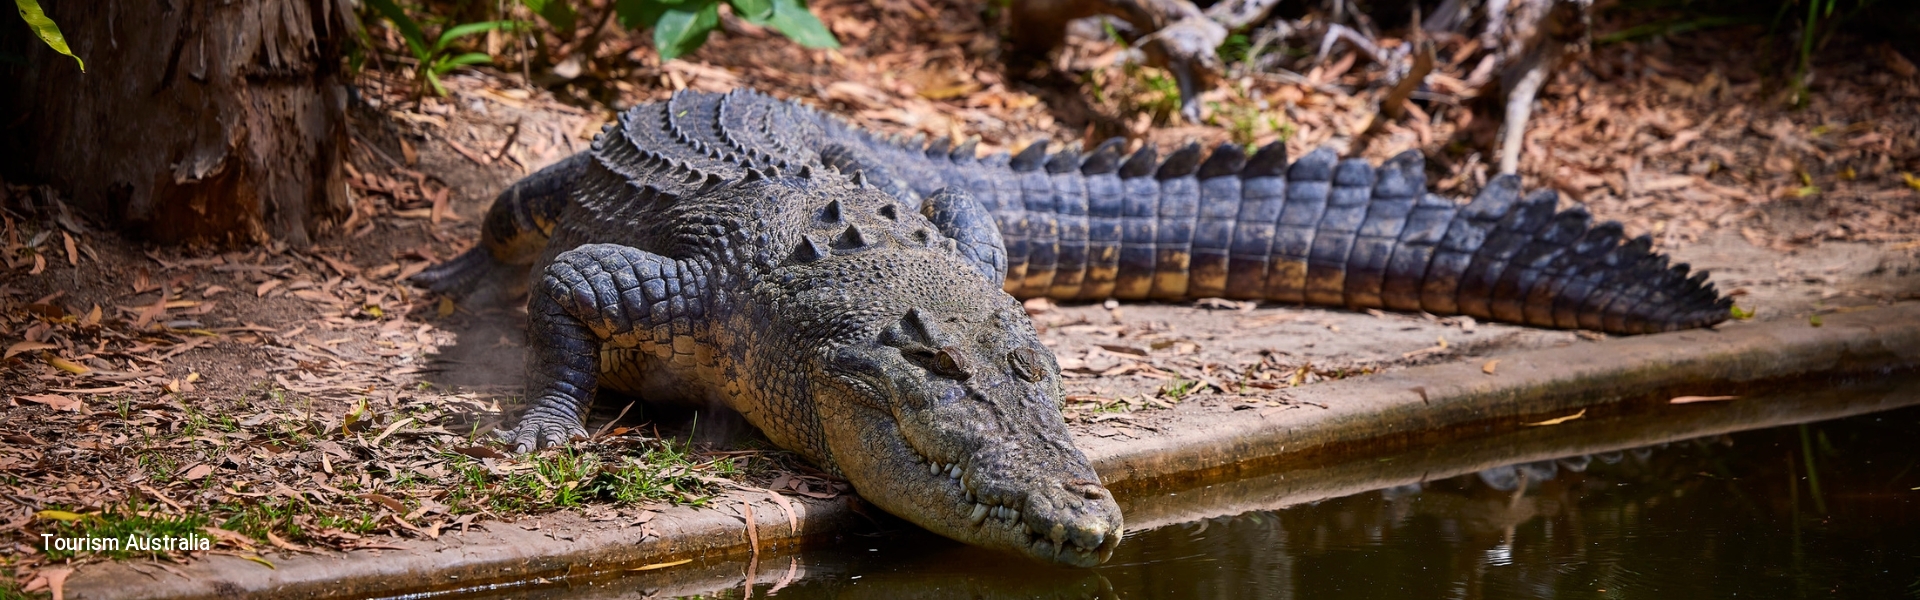 Crocodile - Hartleys Crocodile Adventures